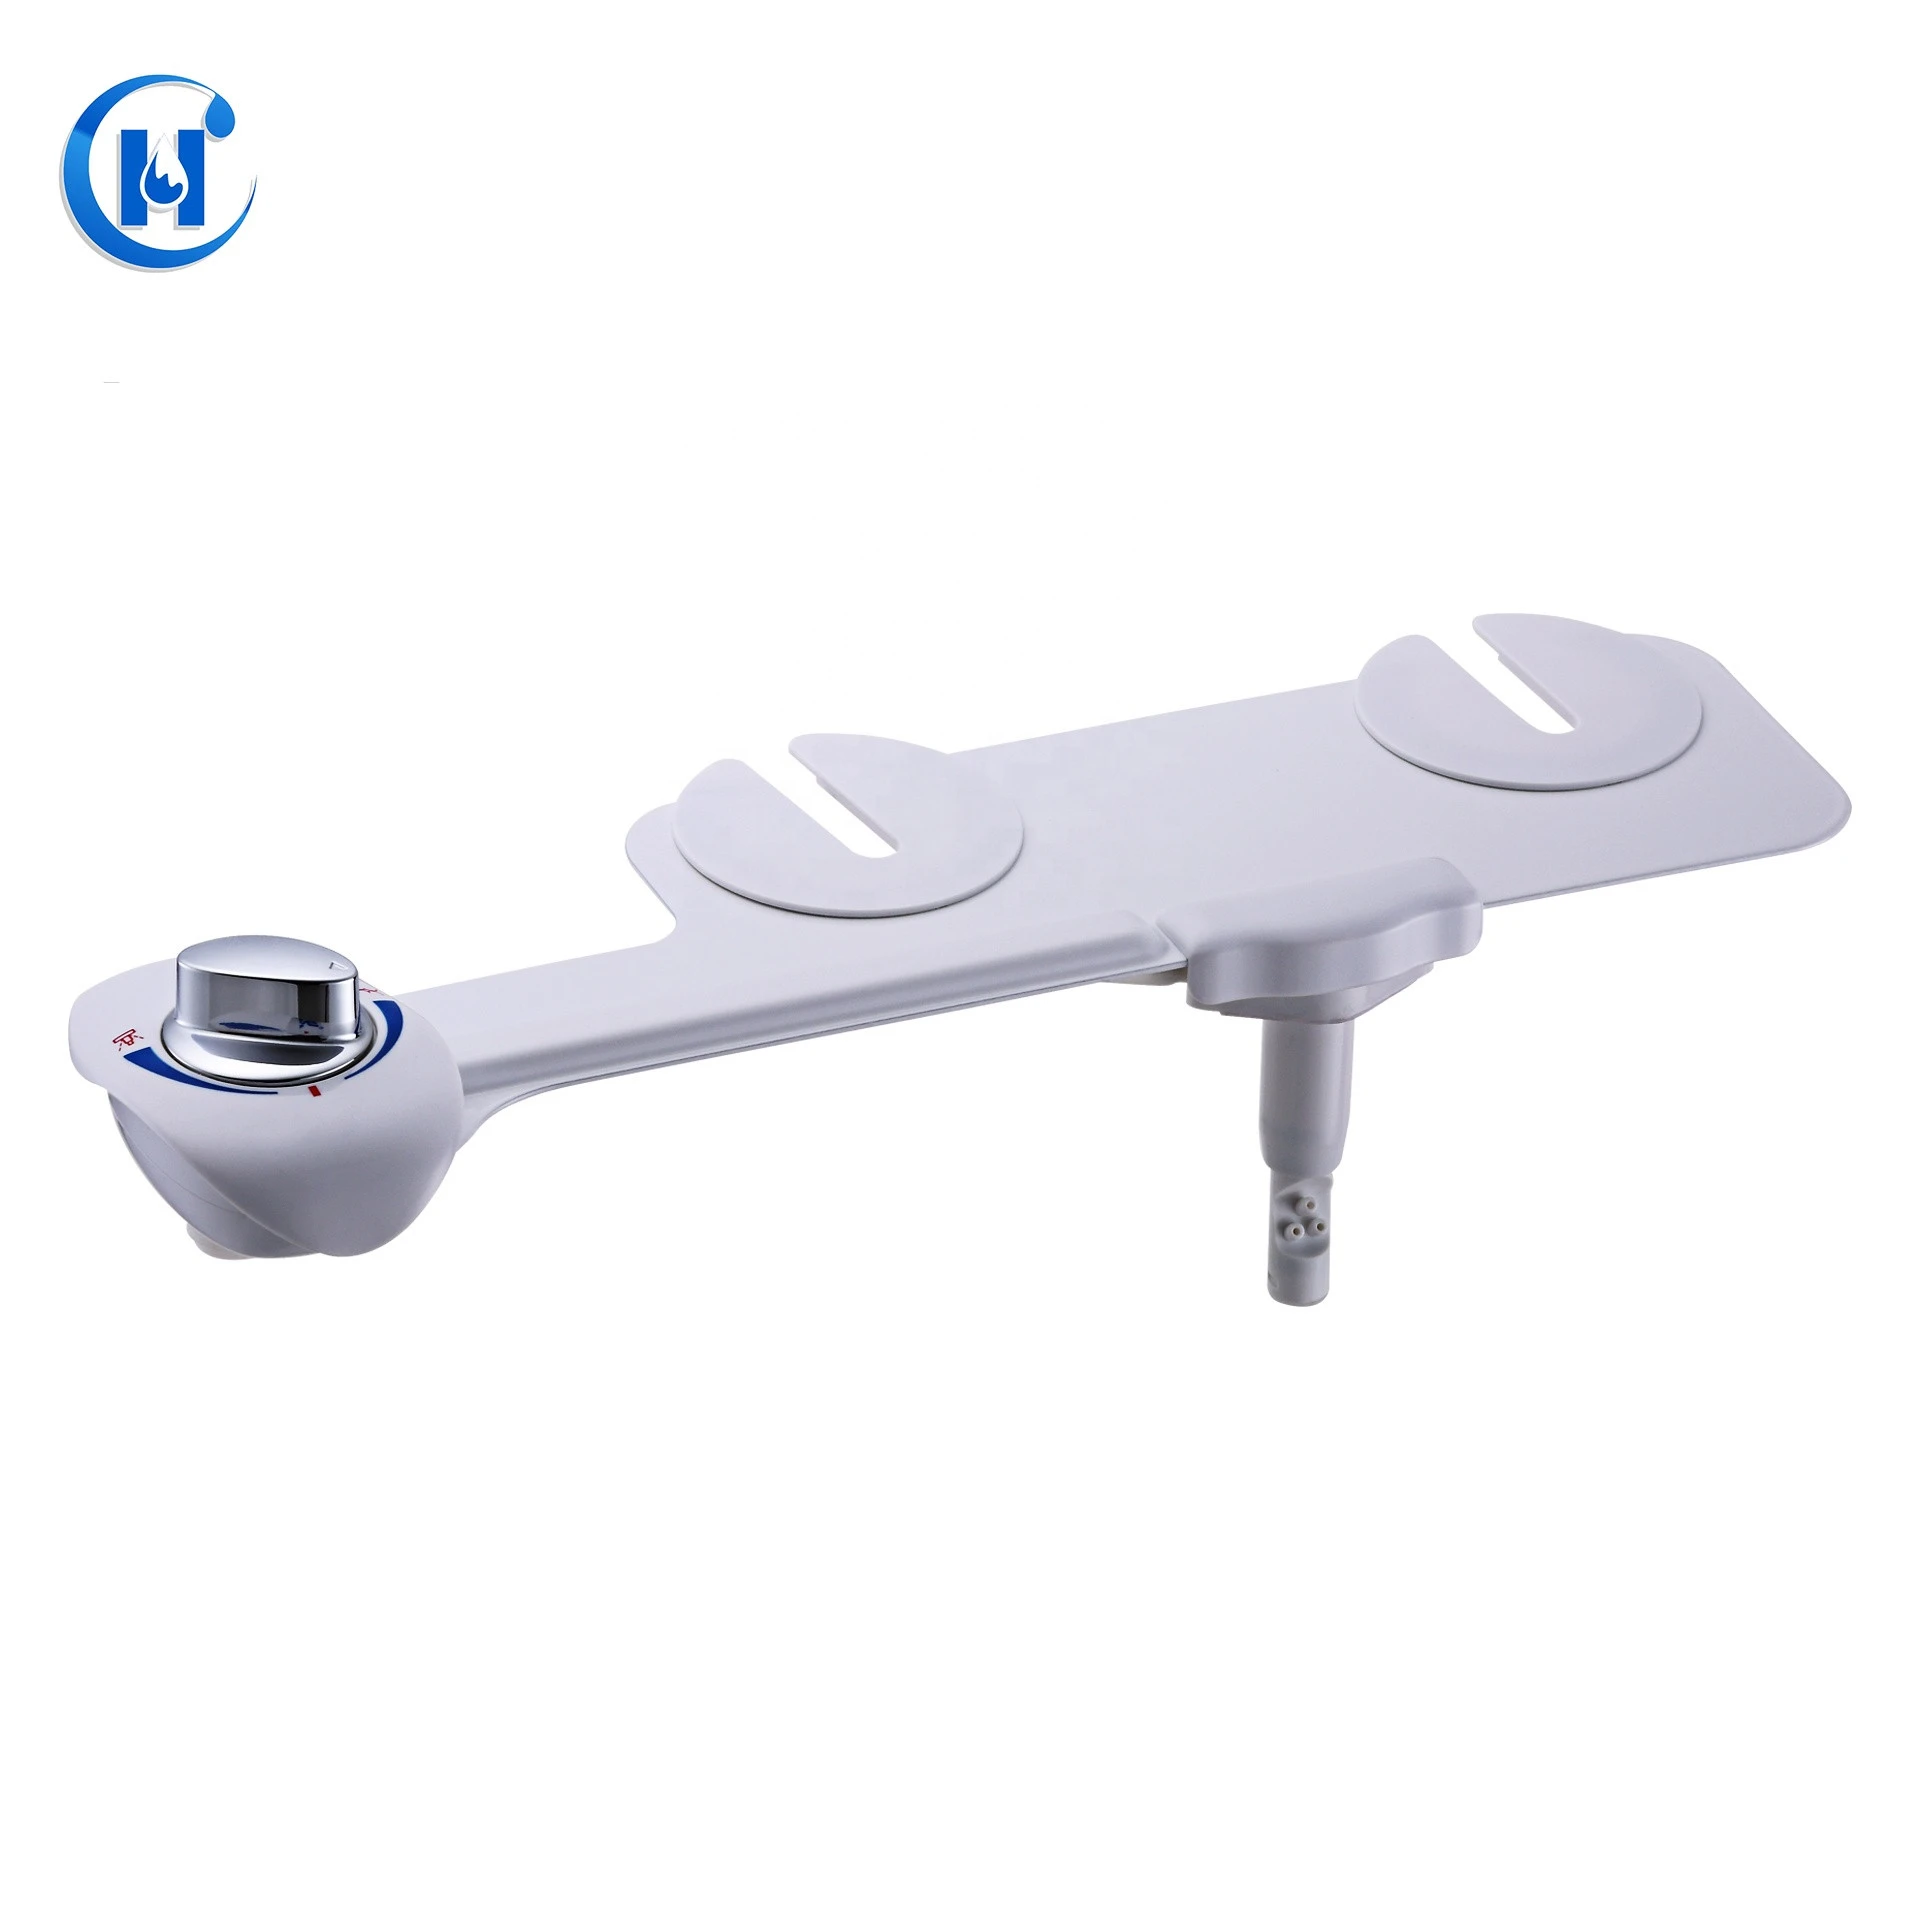 Haojiang ultraslim adjustable wash cold water flow bidet attachment for bathroom